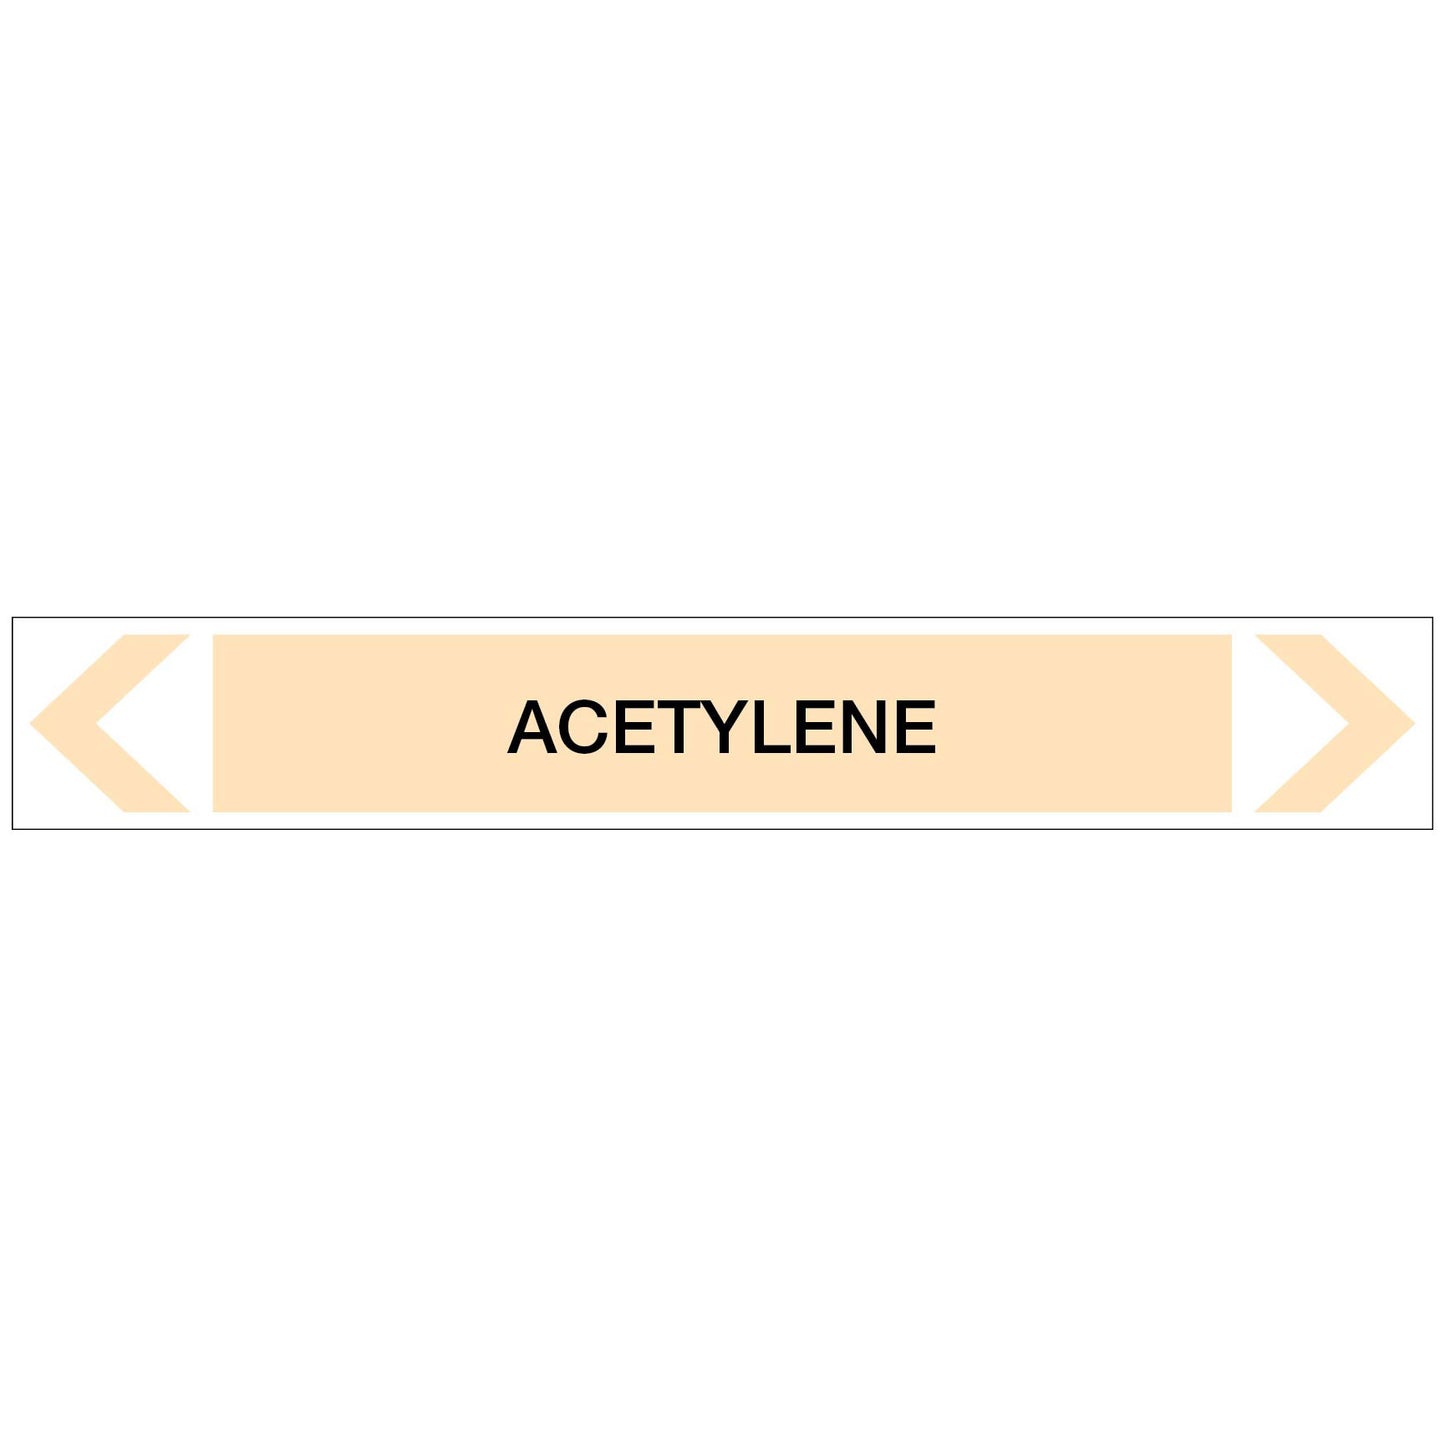 Gases - Acetylene - Pipe Marker Sticker